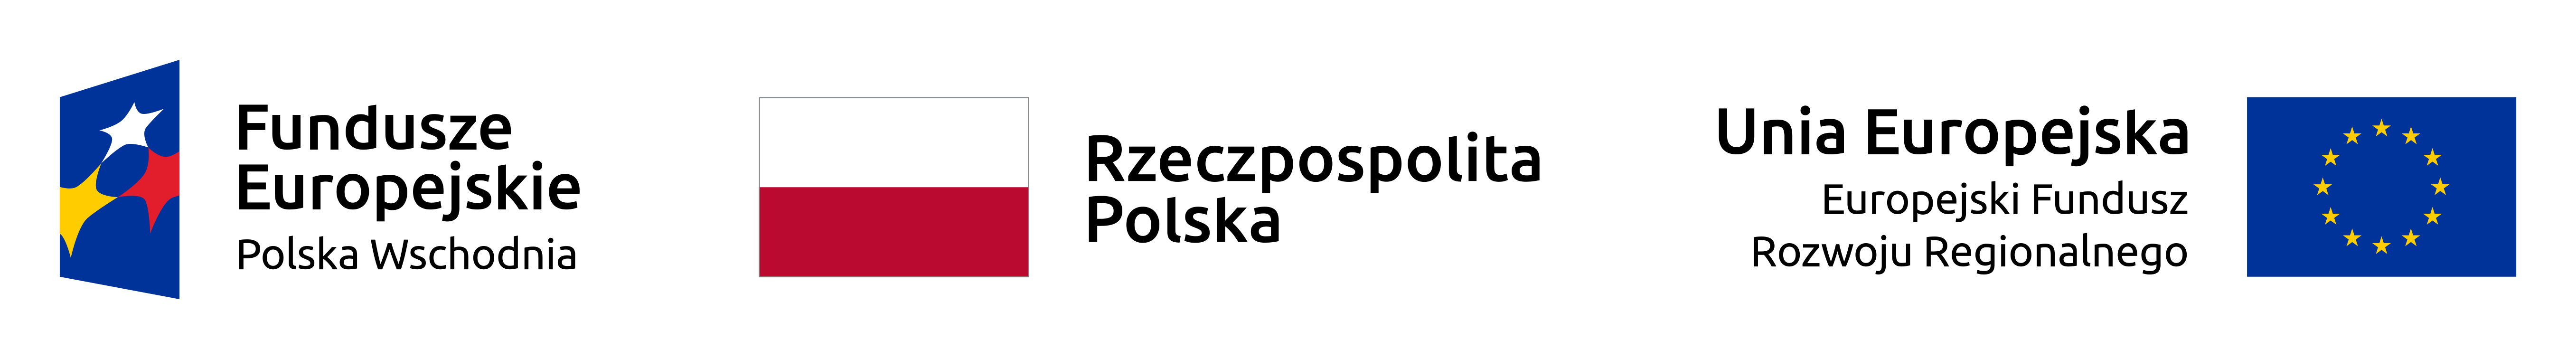 Program Polska Wschodnia